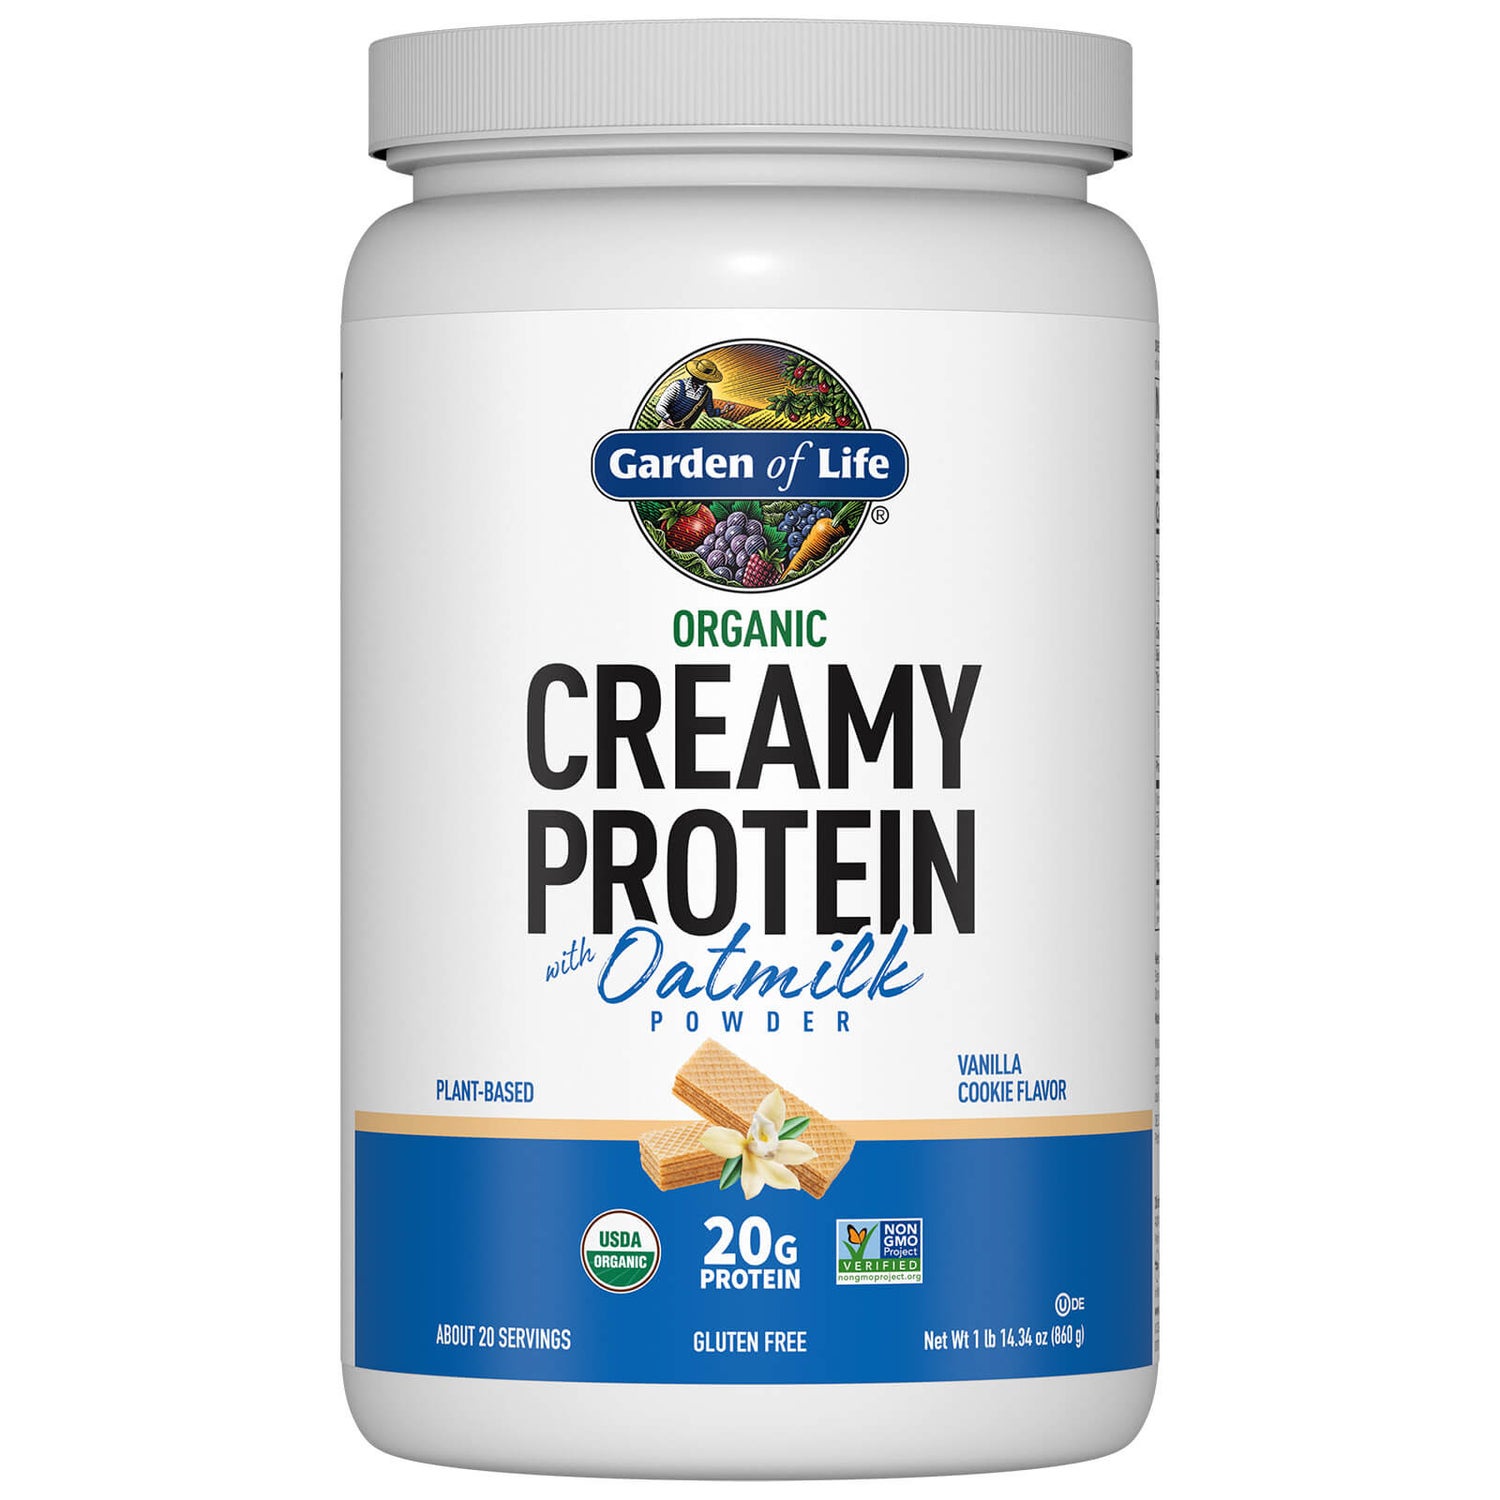 Creamy Plant Based Protein Powder with Oat Milk - Vanilla